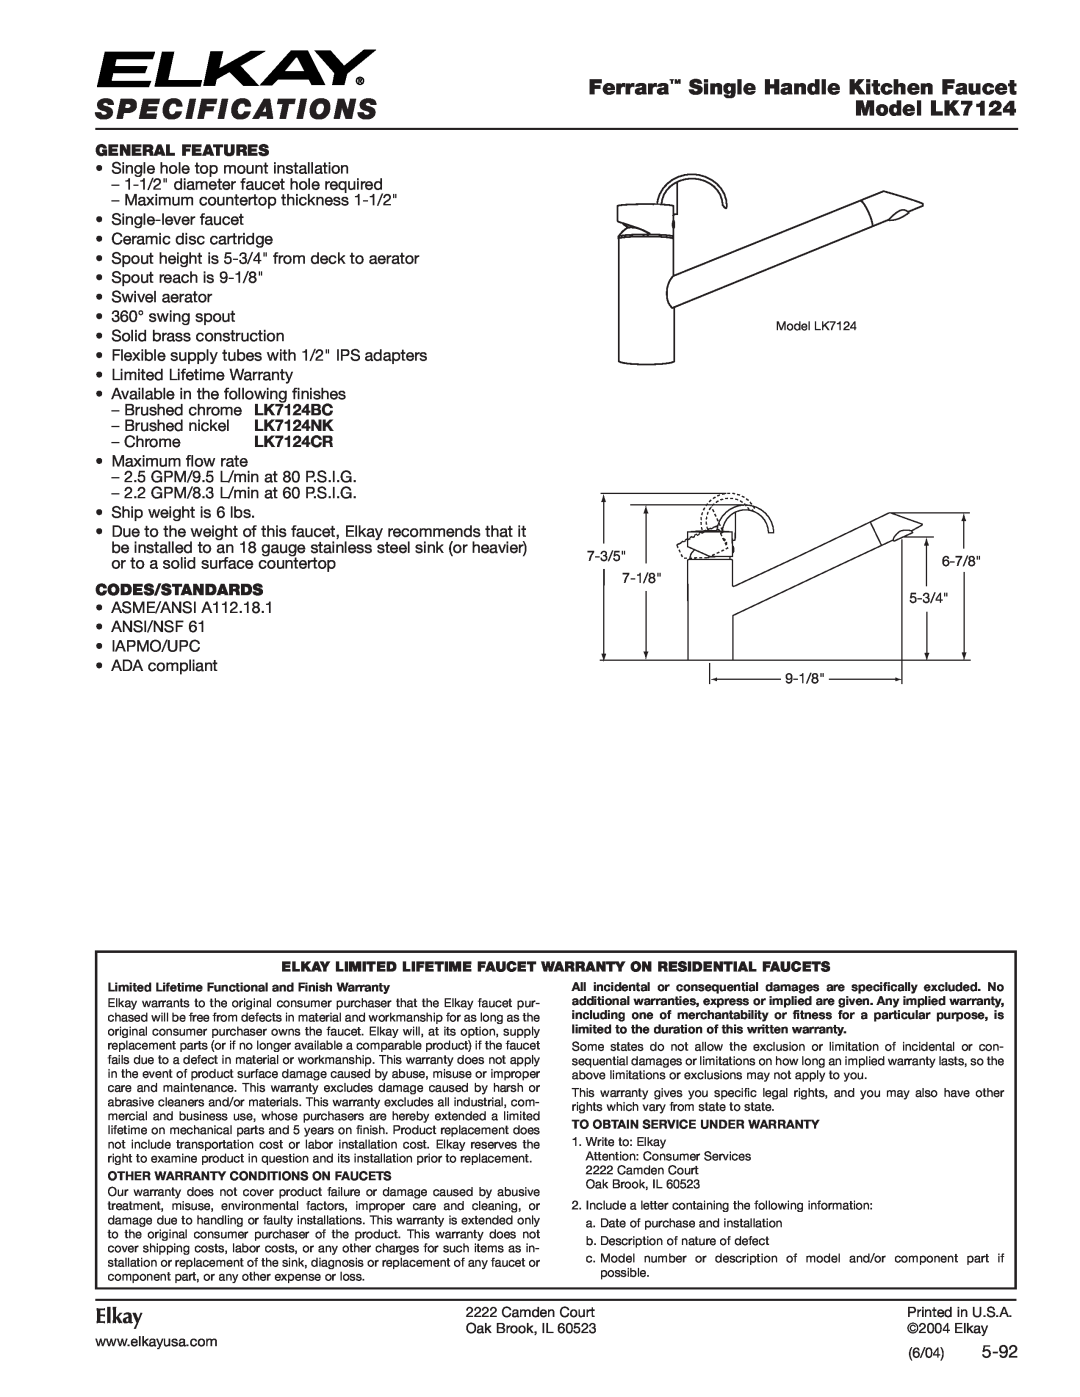 Elkay specifications Specifications, Ferrara Single Handle Kitchen Faucet, Model LK7124, Elkay, 5-92, General Features 